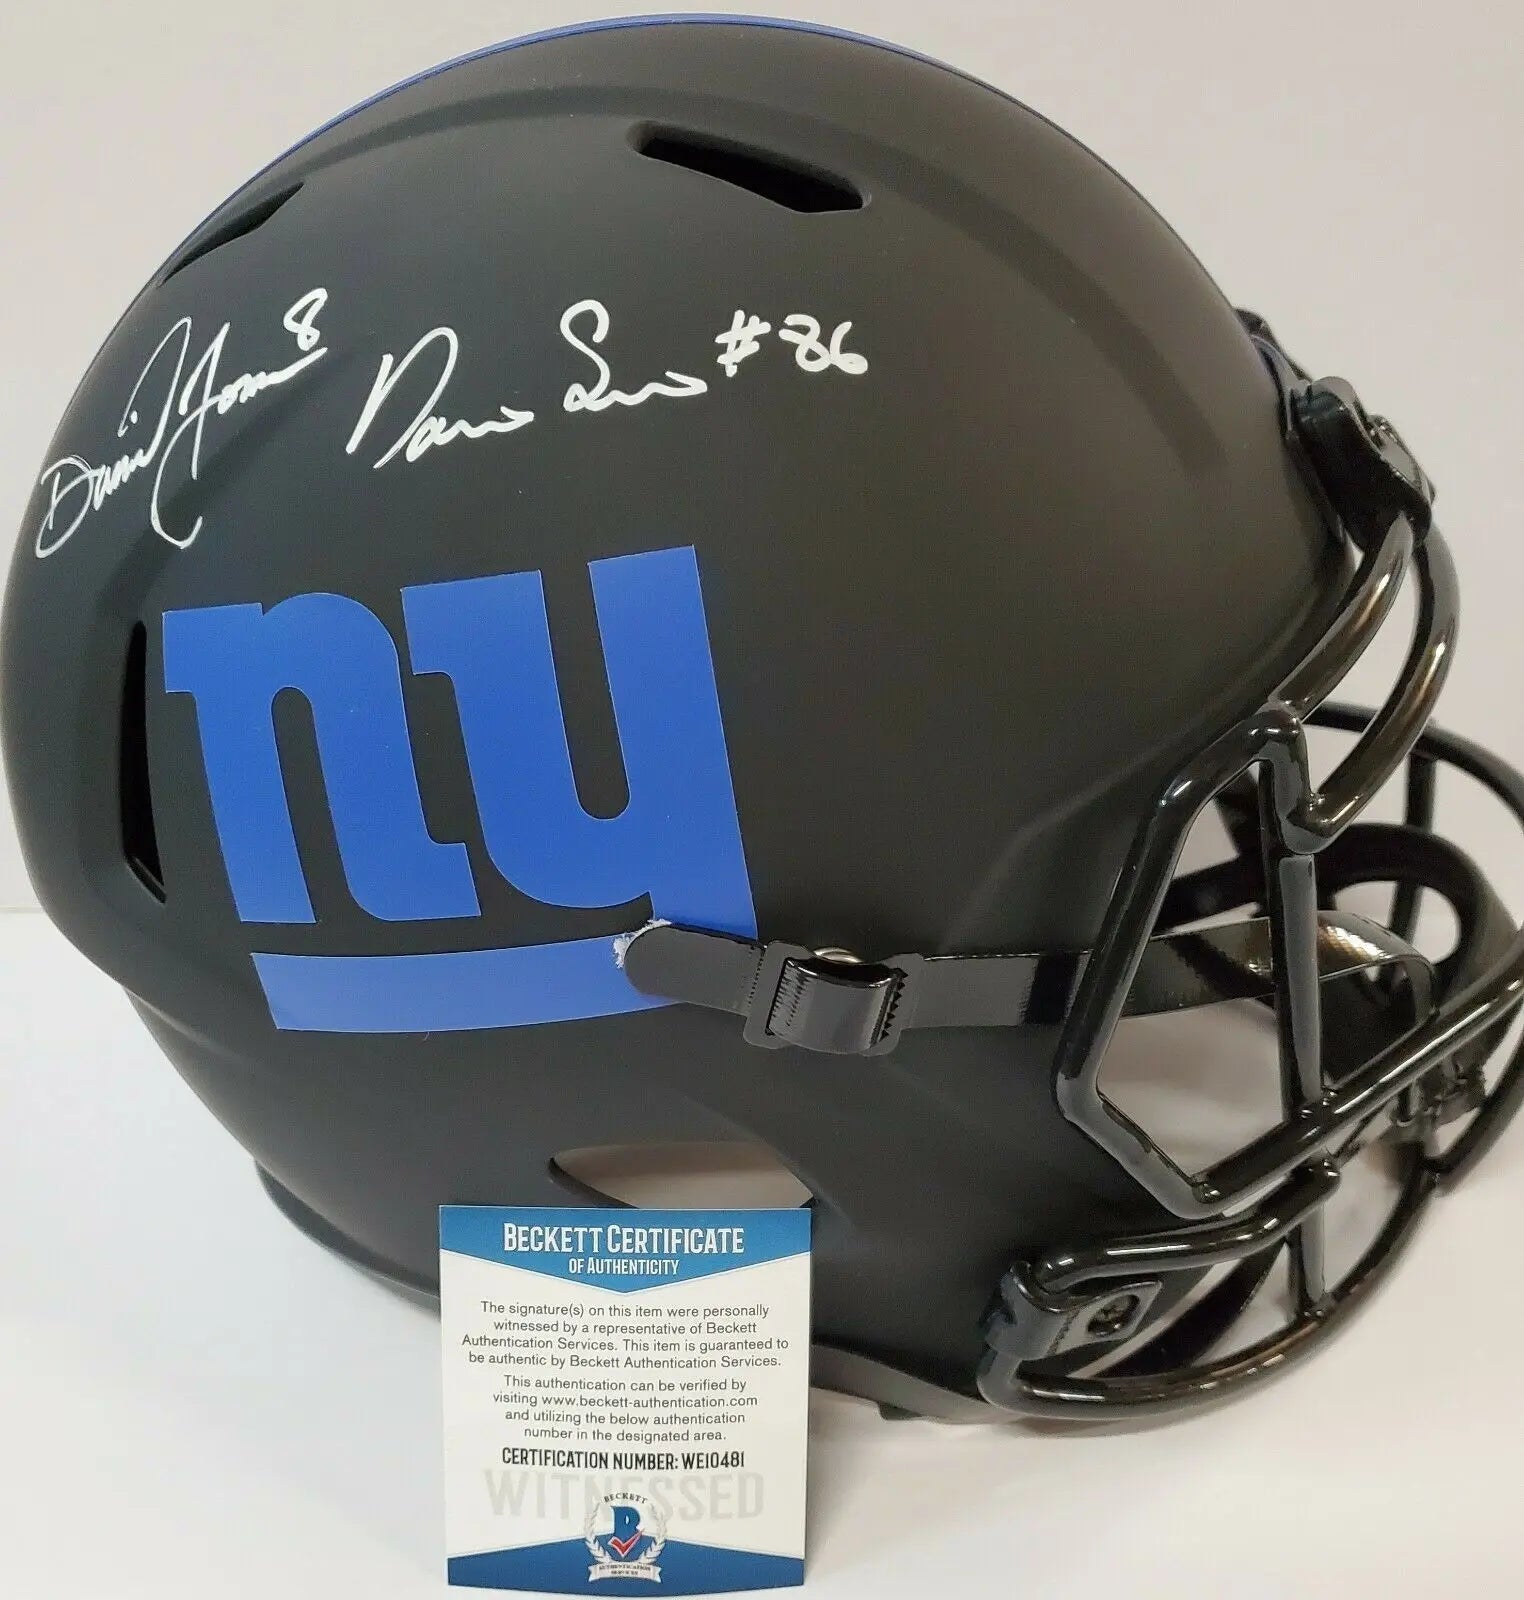 Daniel Jones New York Giants Autographed Football Jersey